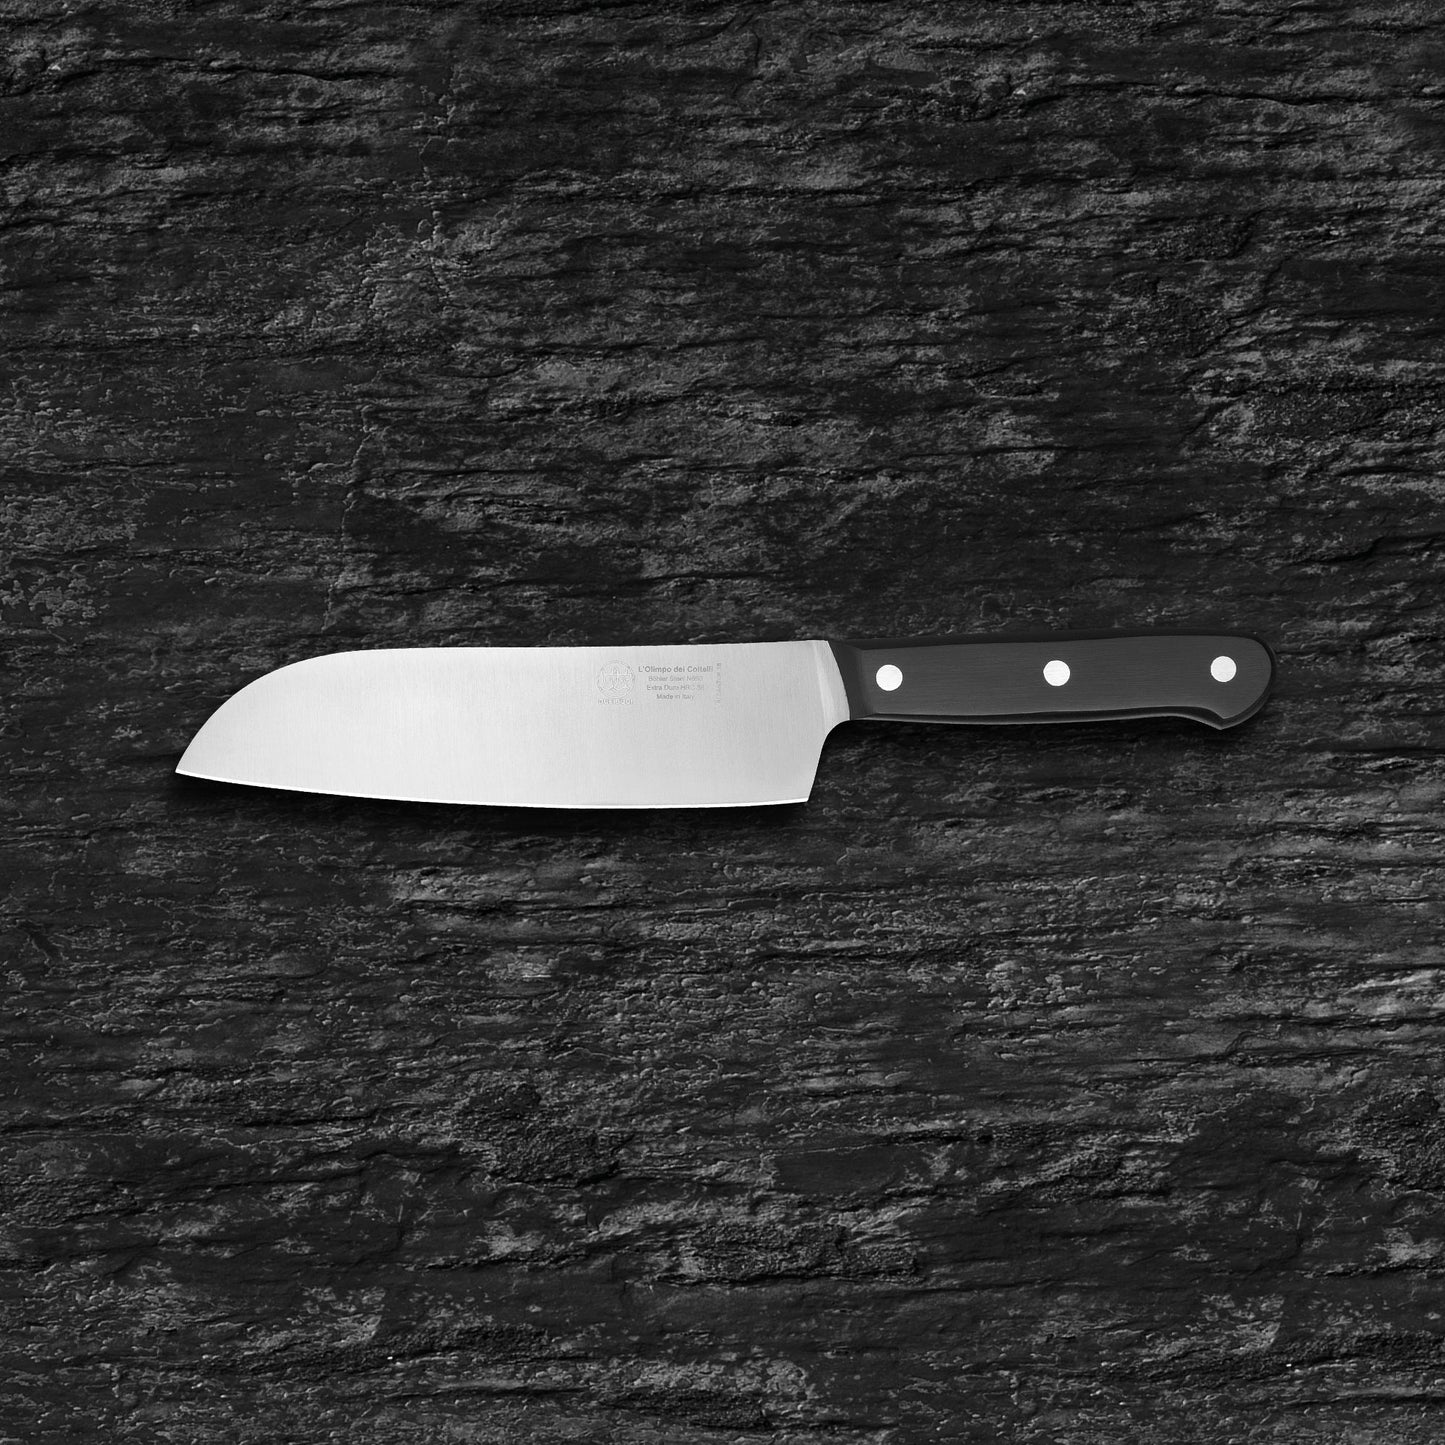 
                  
                    Santoku Kitchen Knife - Blade 7.08"- N690 Stainless Steel - Hrc 60 - Black Technical Polymer Handle
                  
                